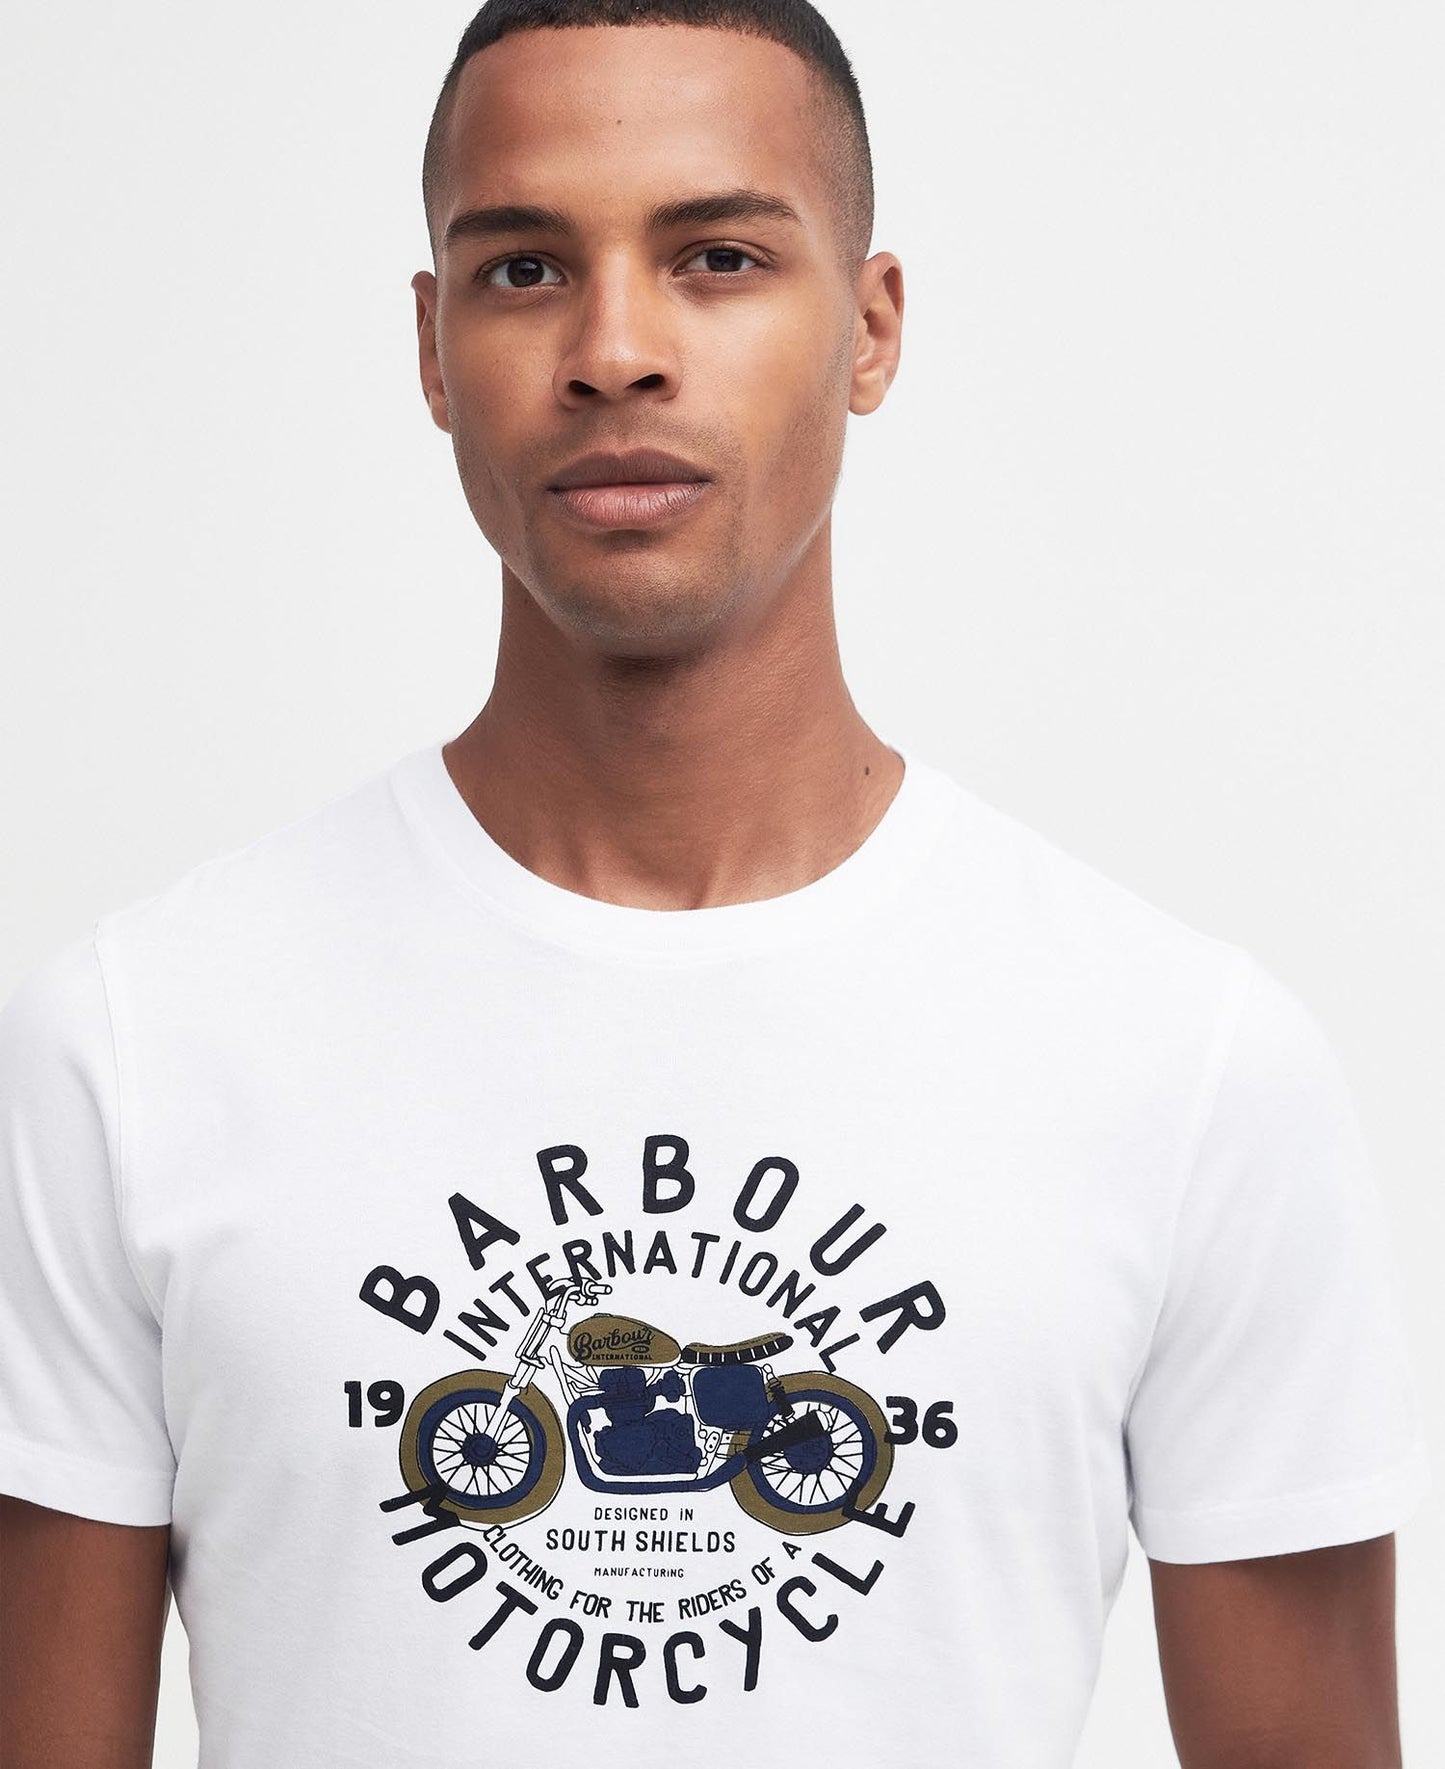 Barbour T-shirt Spirit